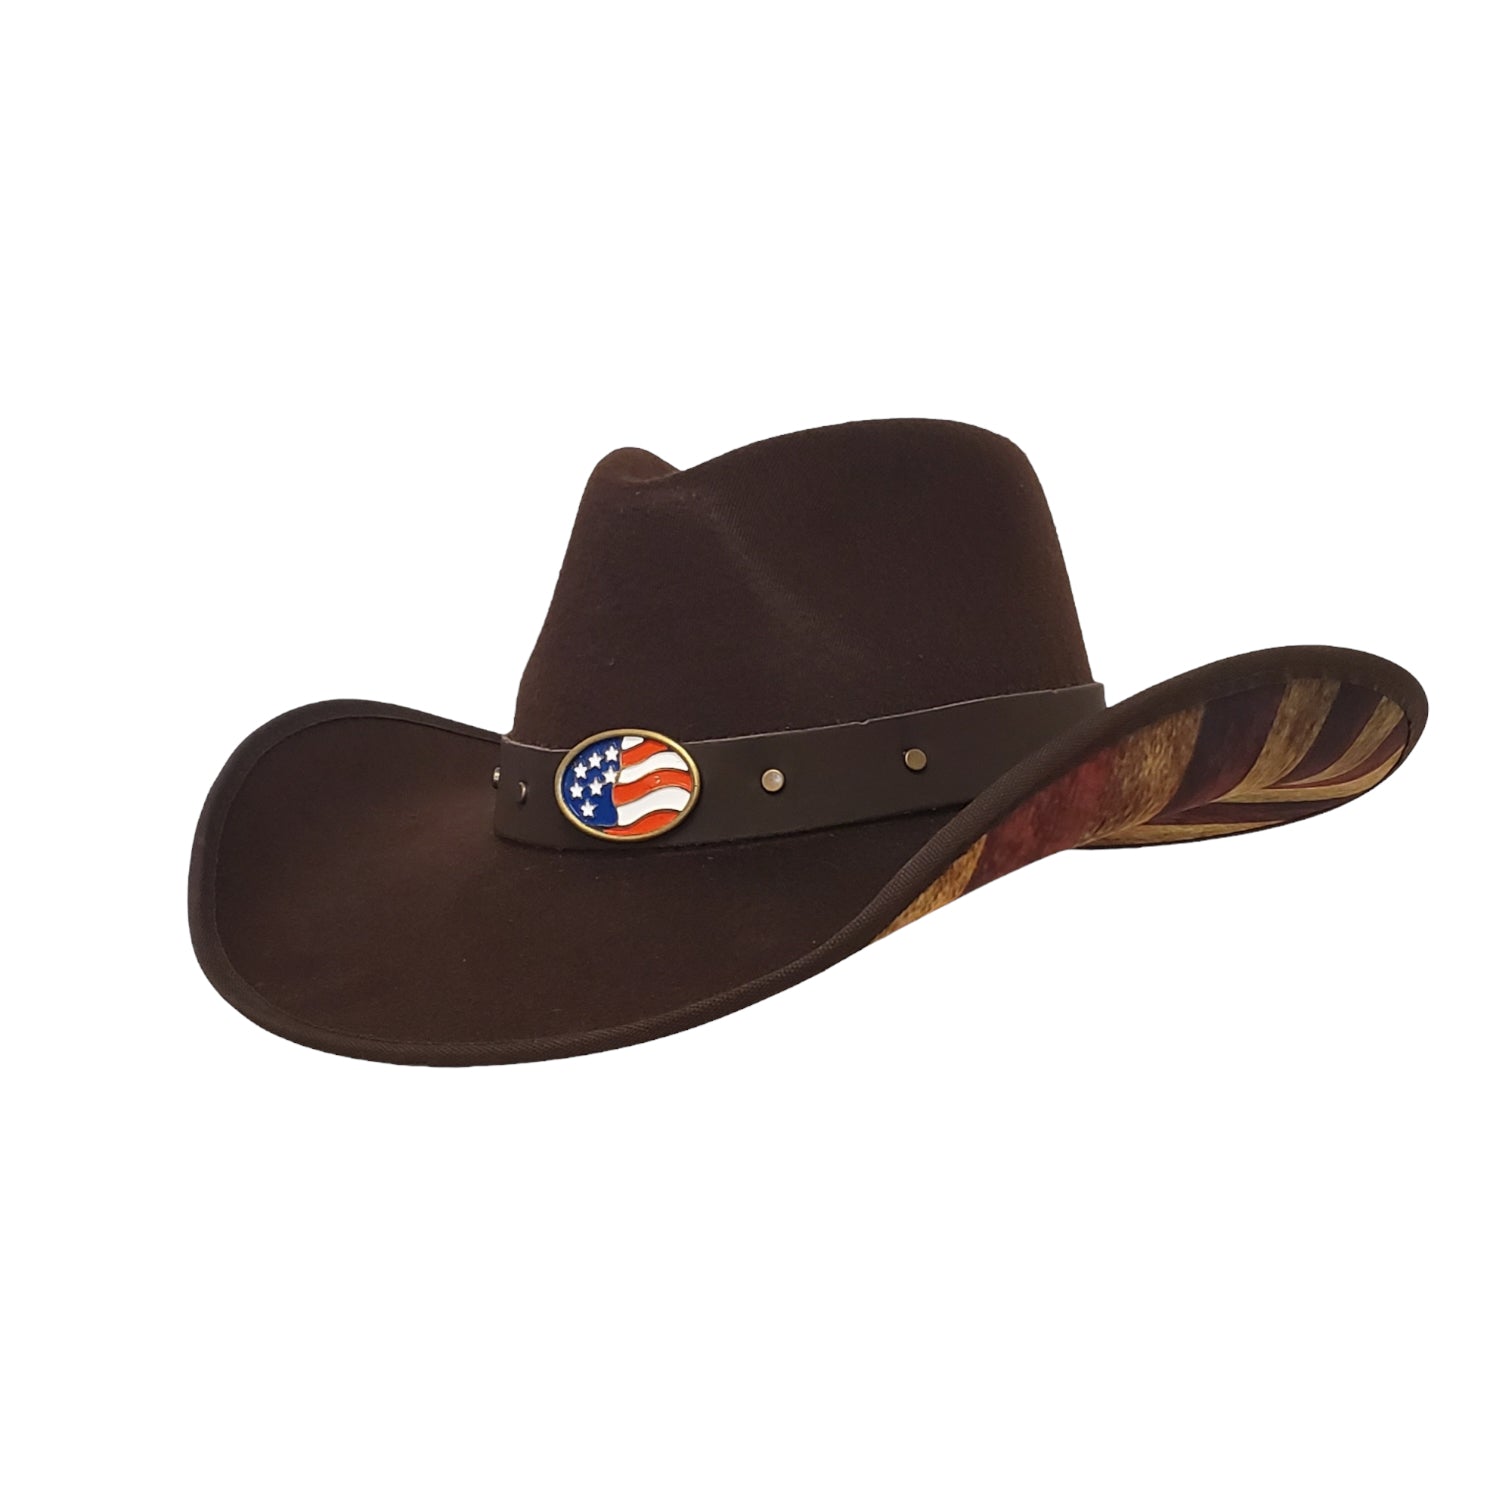 Brown Felt Cowboy Hat with American Flag Bottom